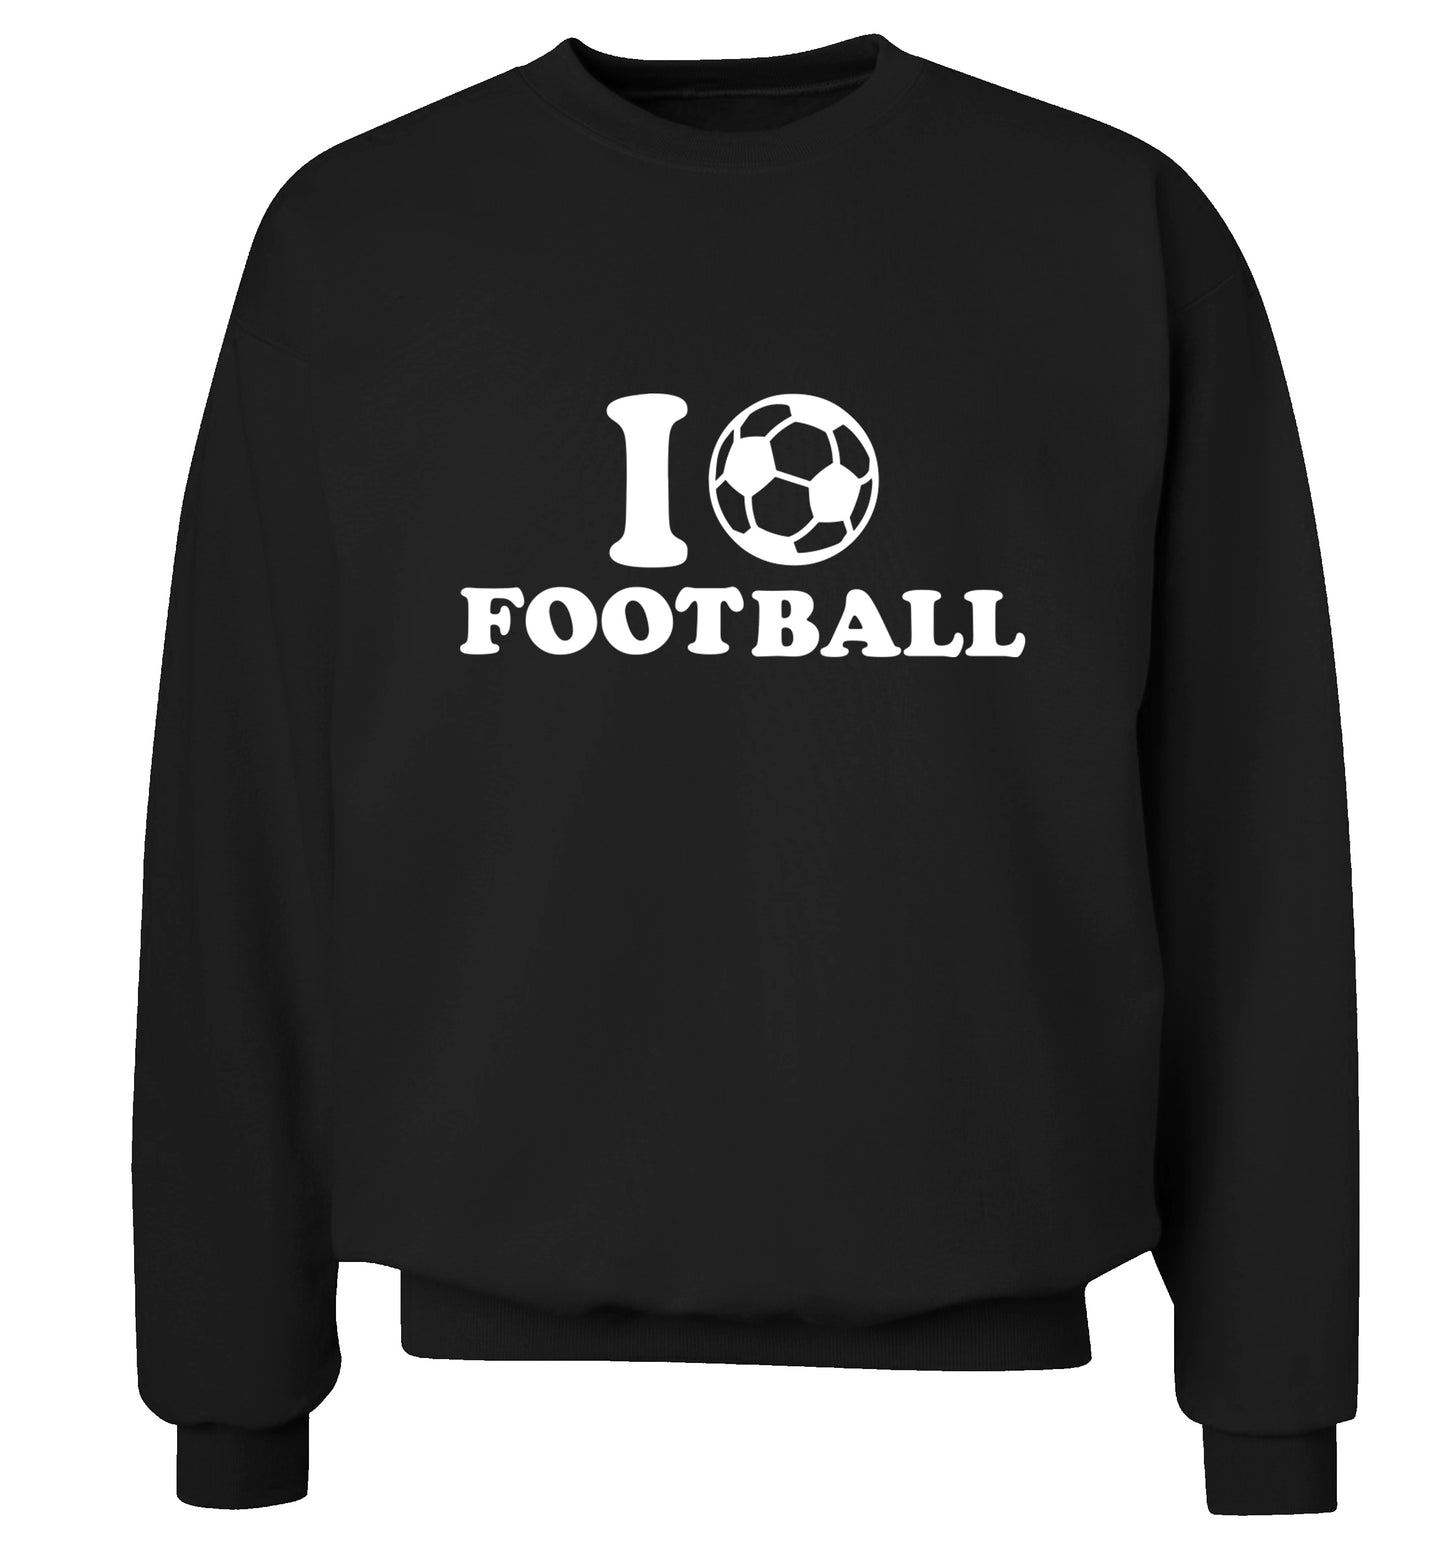 I love football Adult's unisexblack Sweater 2XL